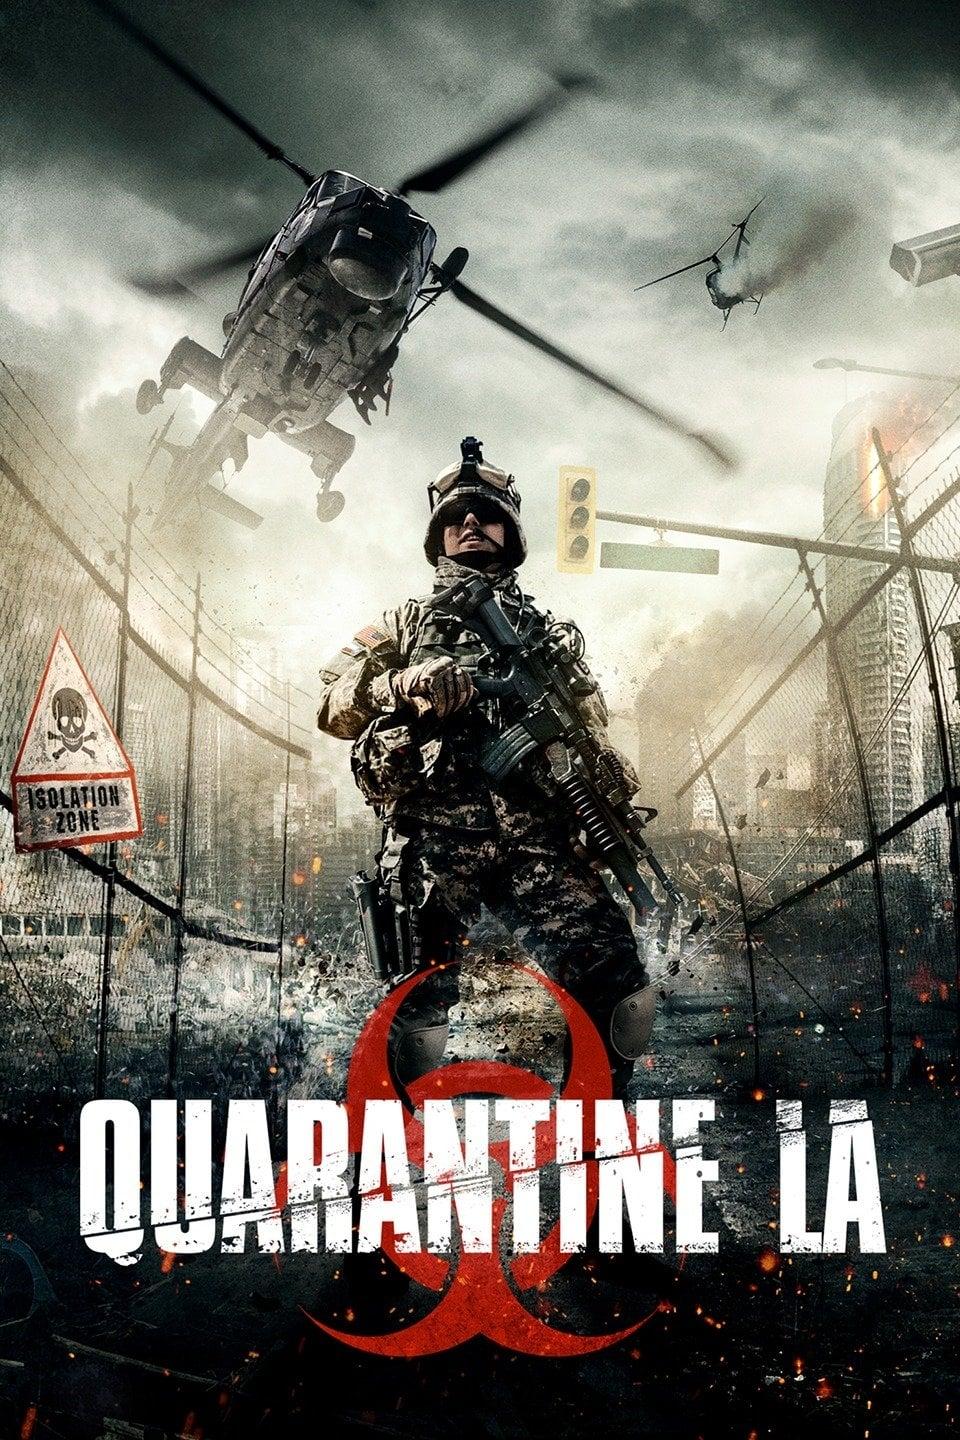 Quarantine L.A. poster